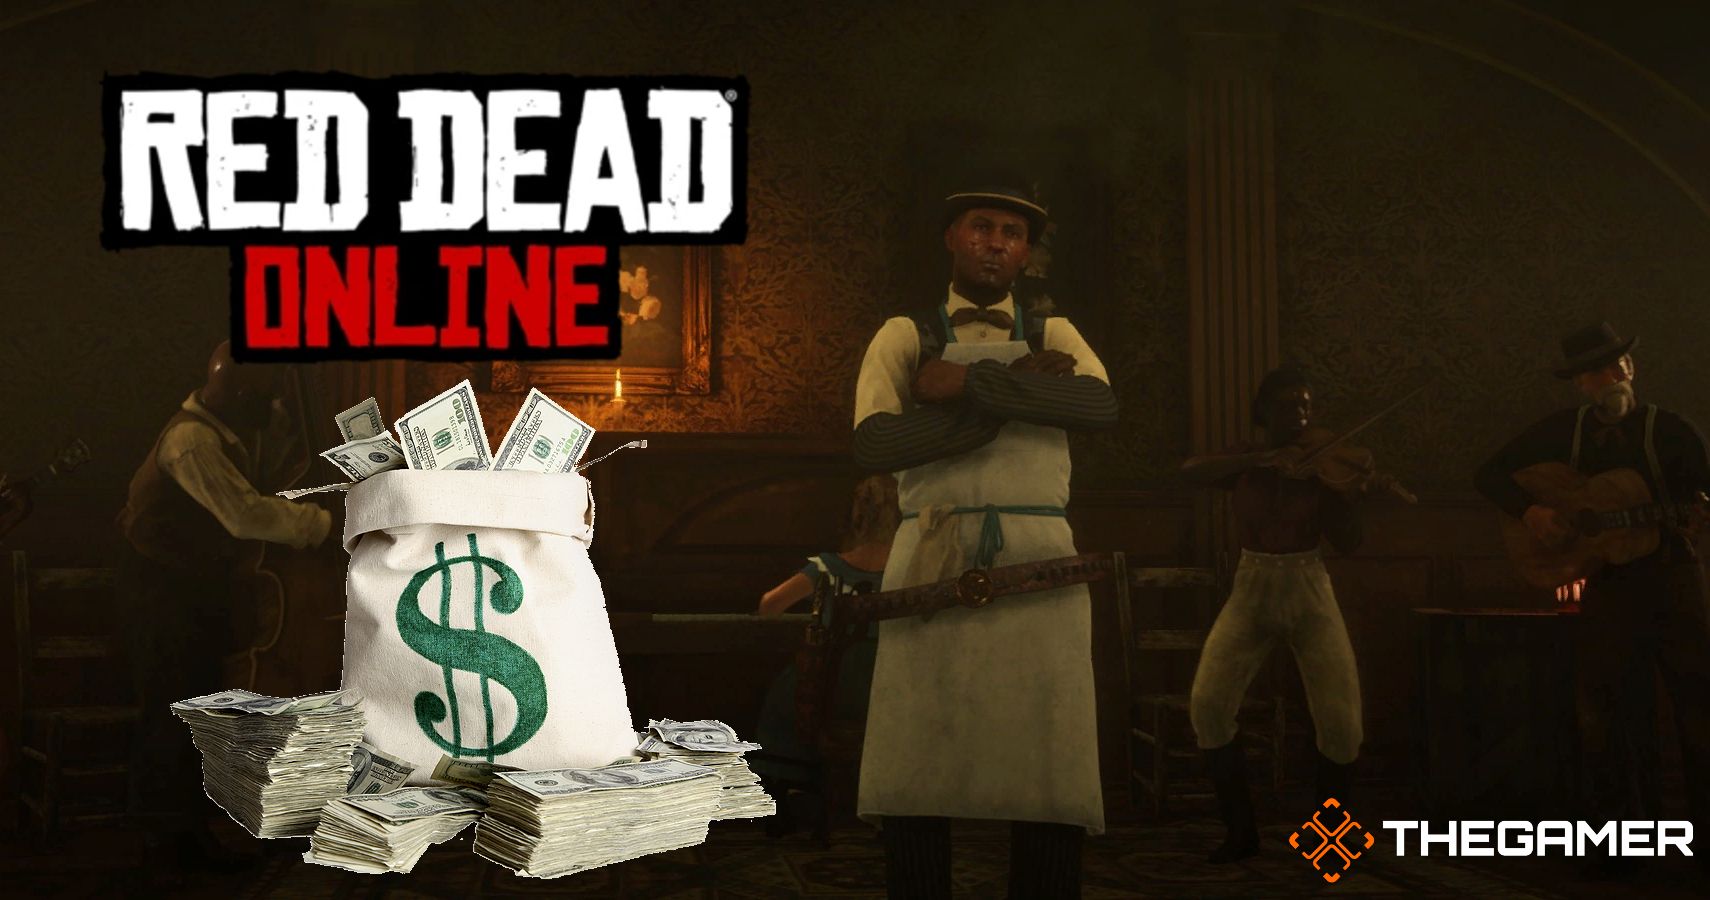 Red Dead Redemption (GOTY) - PS3 - Interactive Gamestore